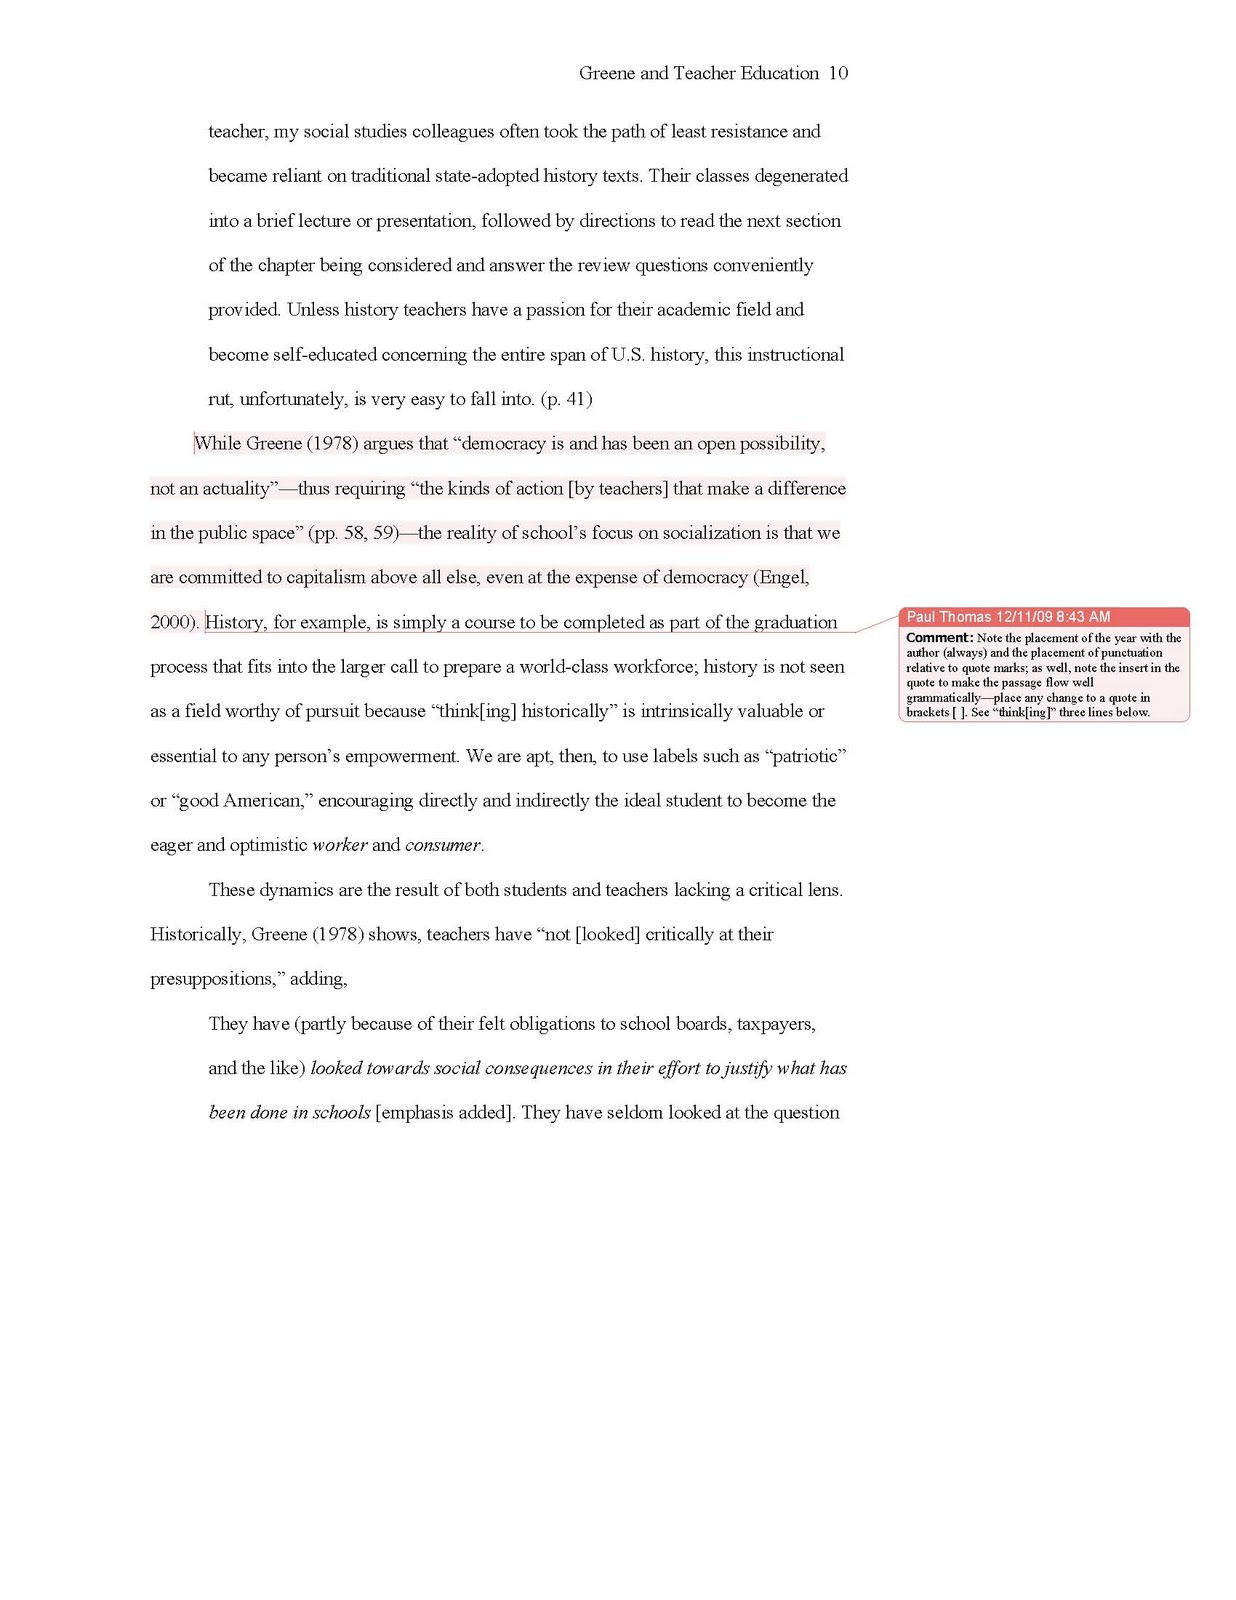 apa format citation in essay example